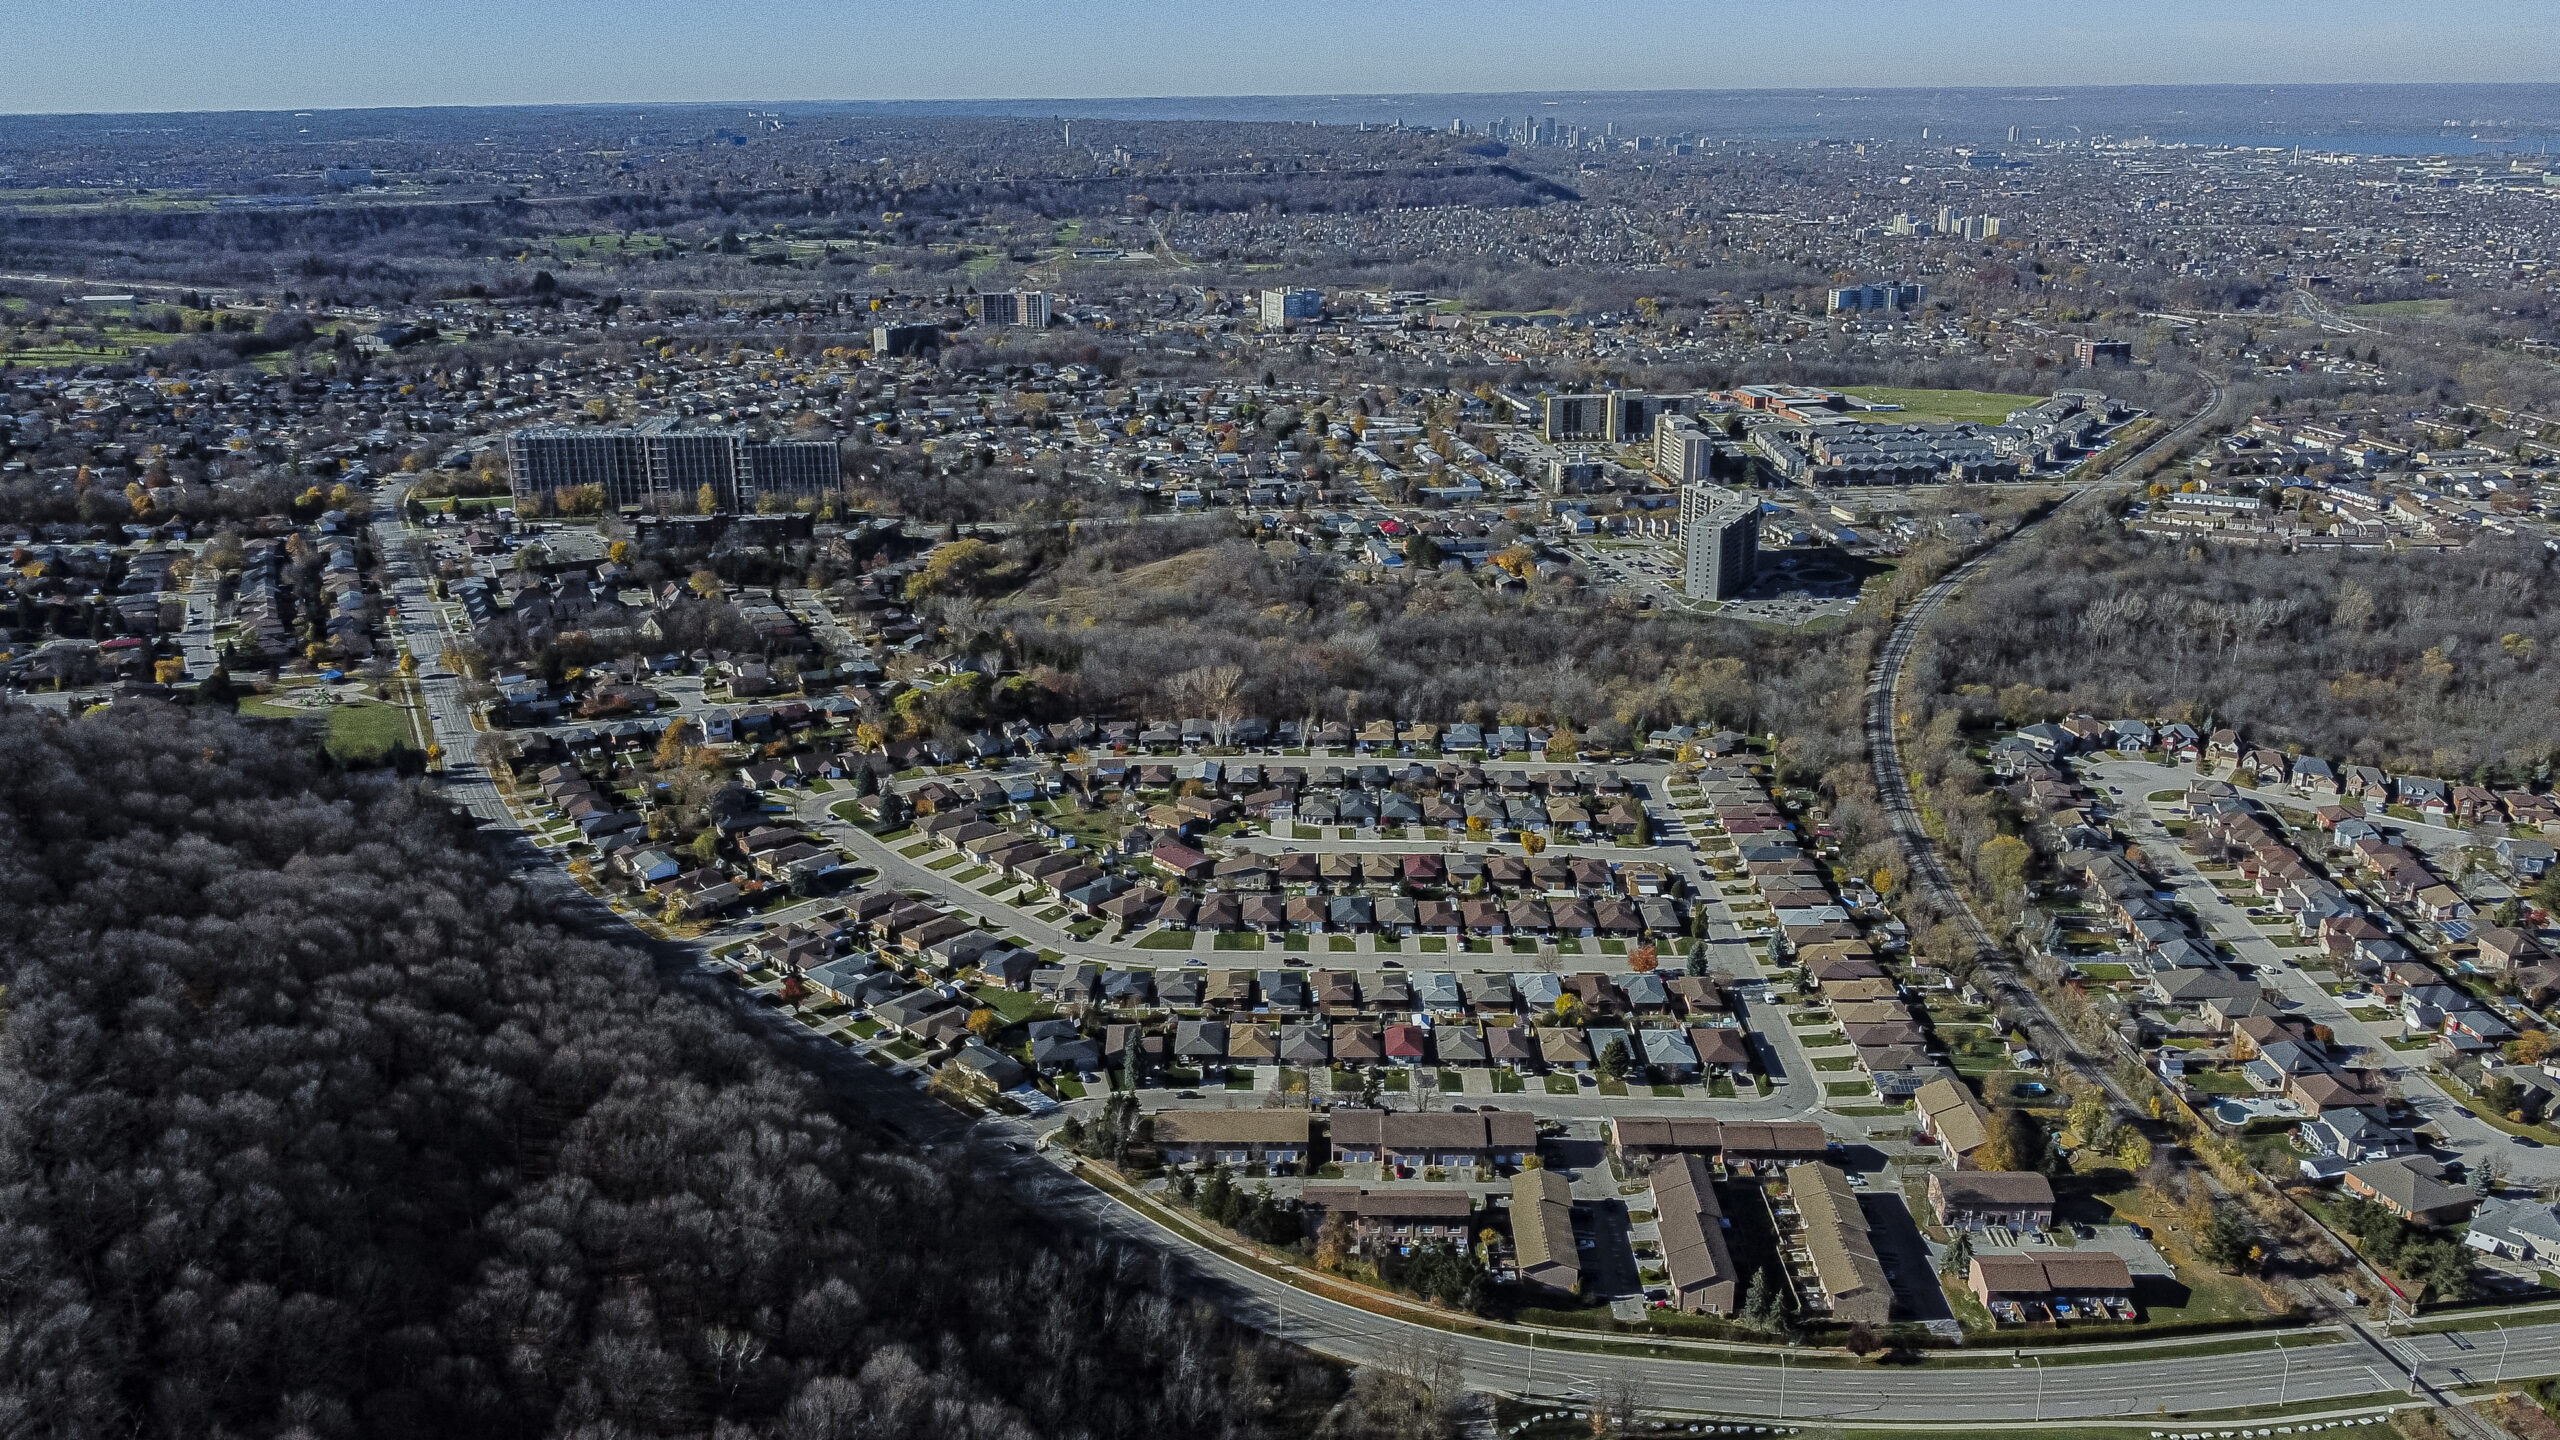 Conservation authorities: Aerial image of urban sprawl